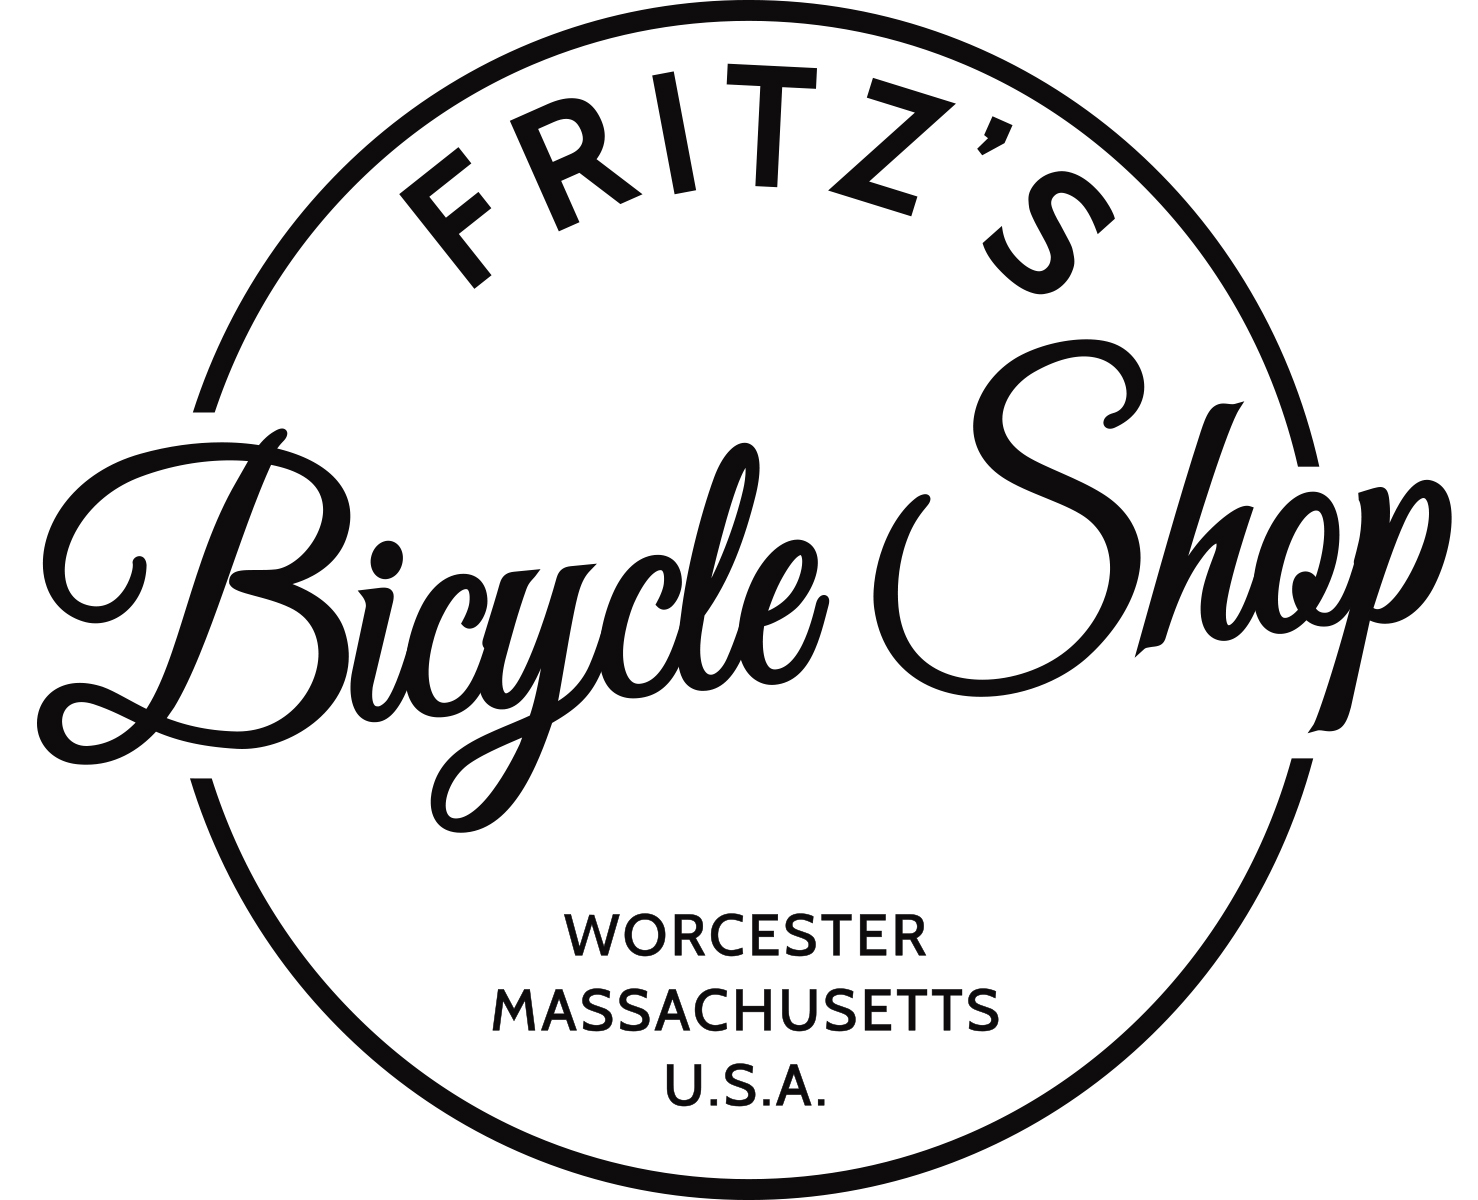 Sponsor Fritz's Bicycle Shop